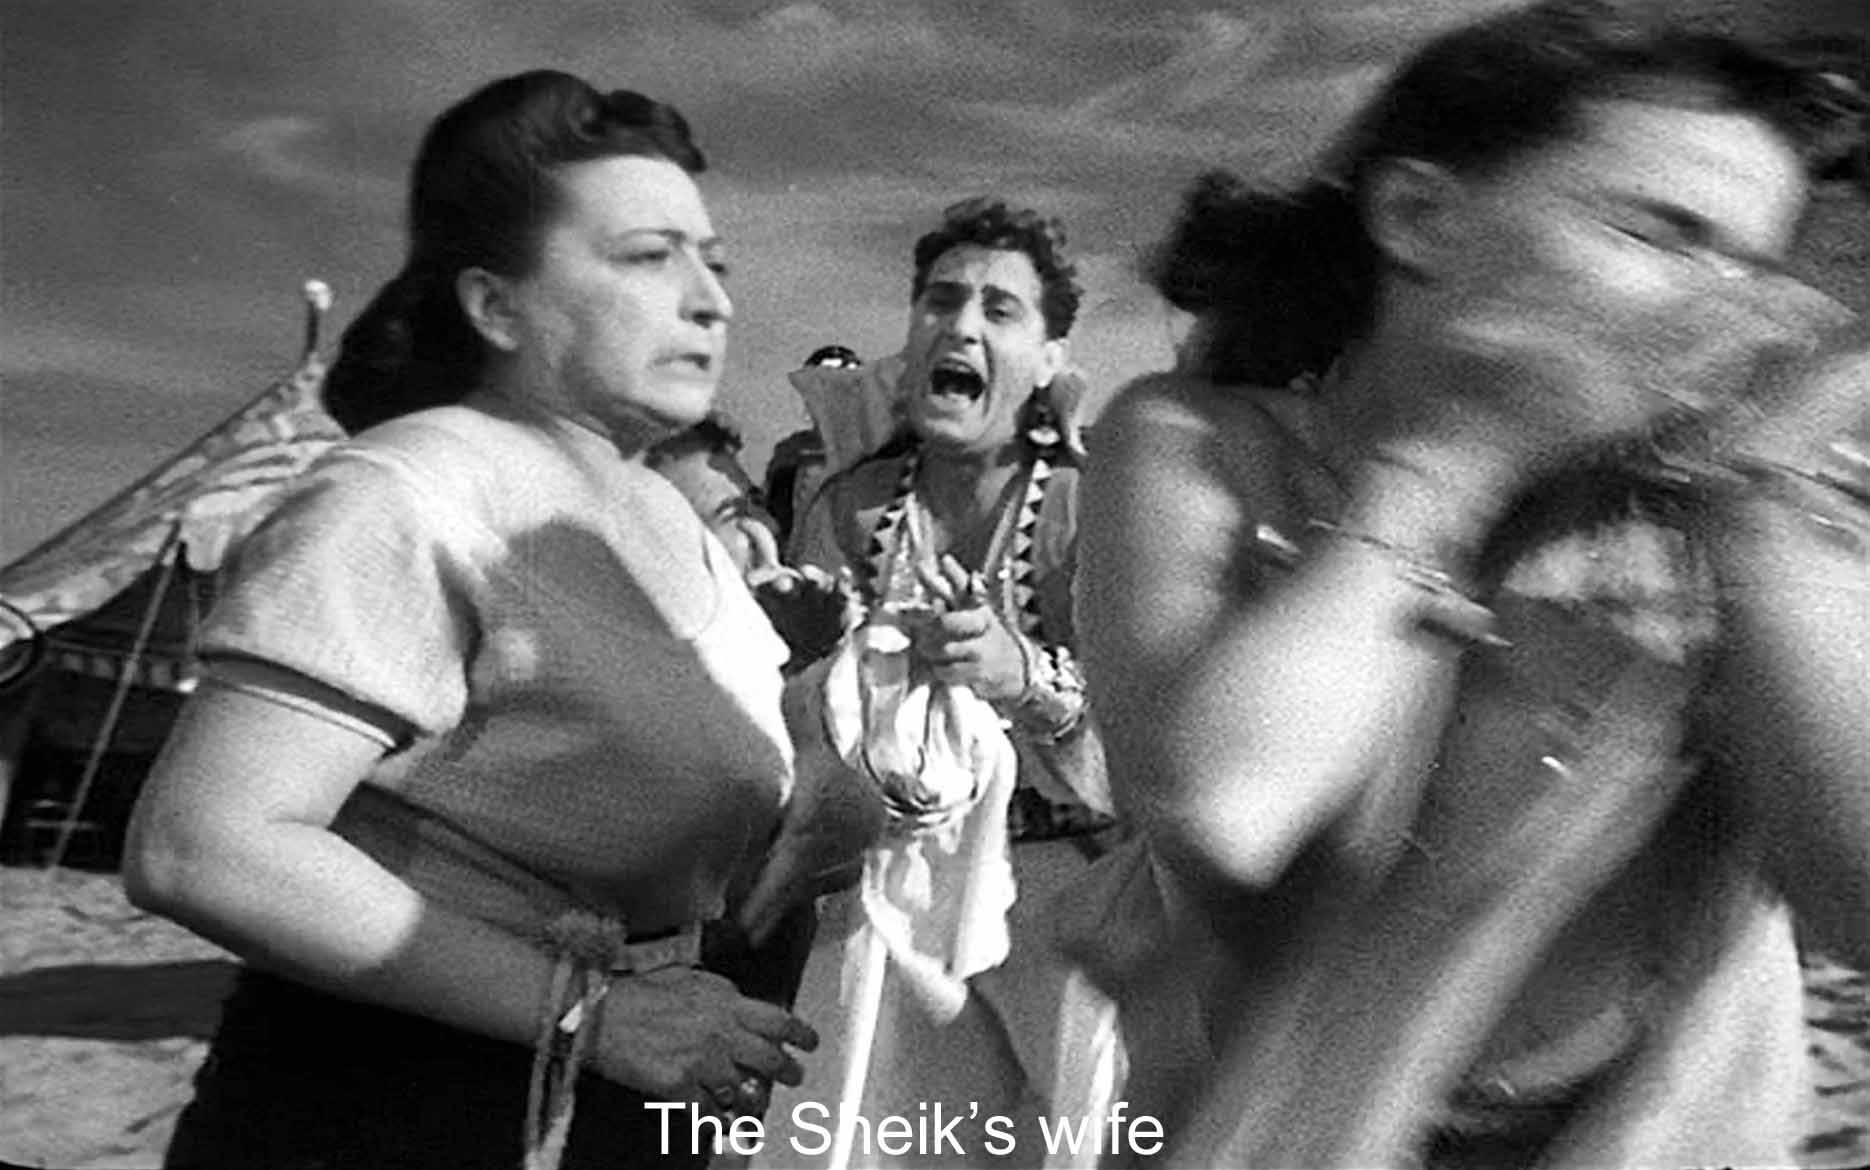 The Sheik's wife